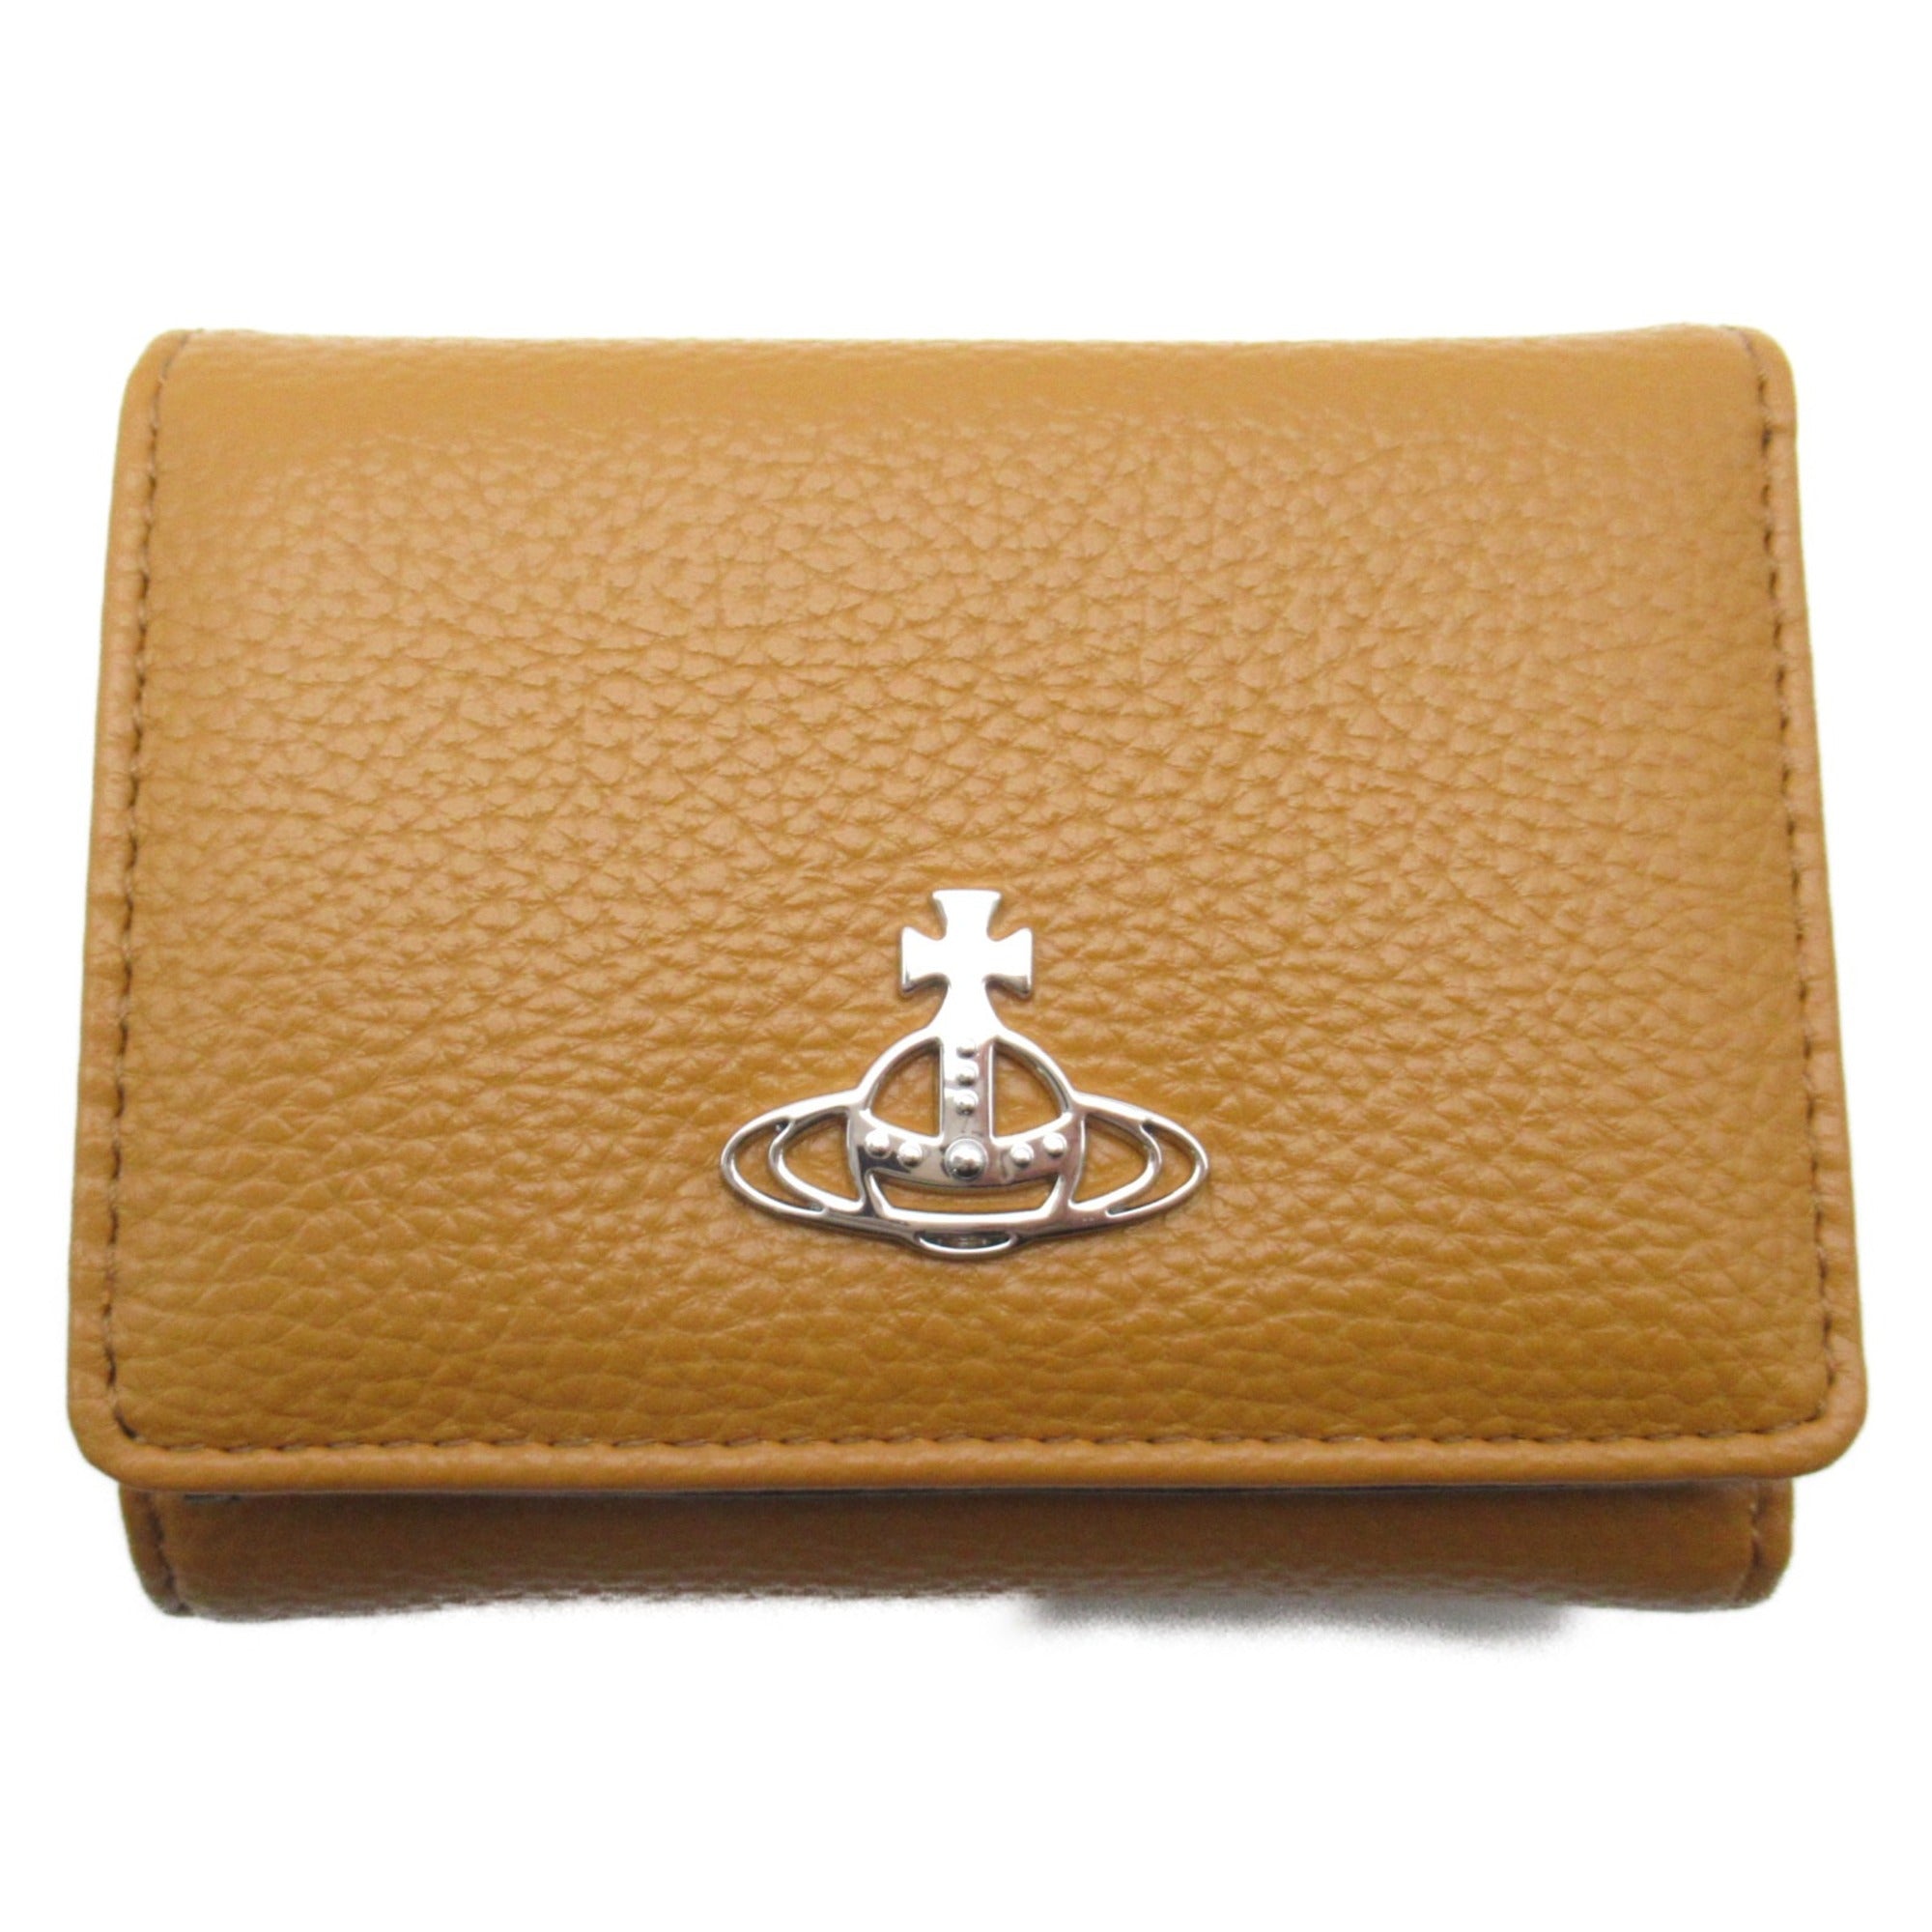 Purse Wallet Yellow Leather Grain Leather 51010018S000DE401